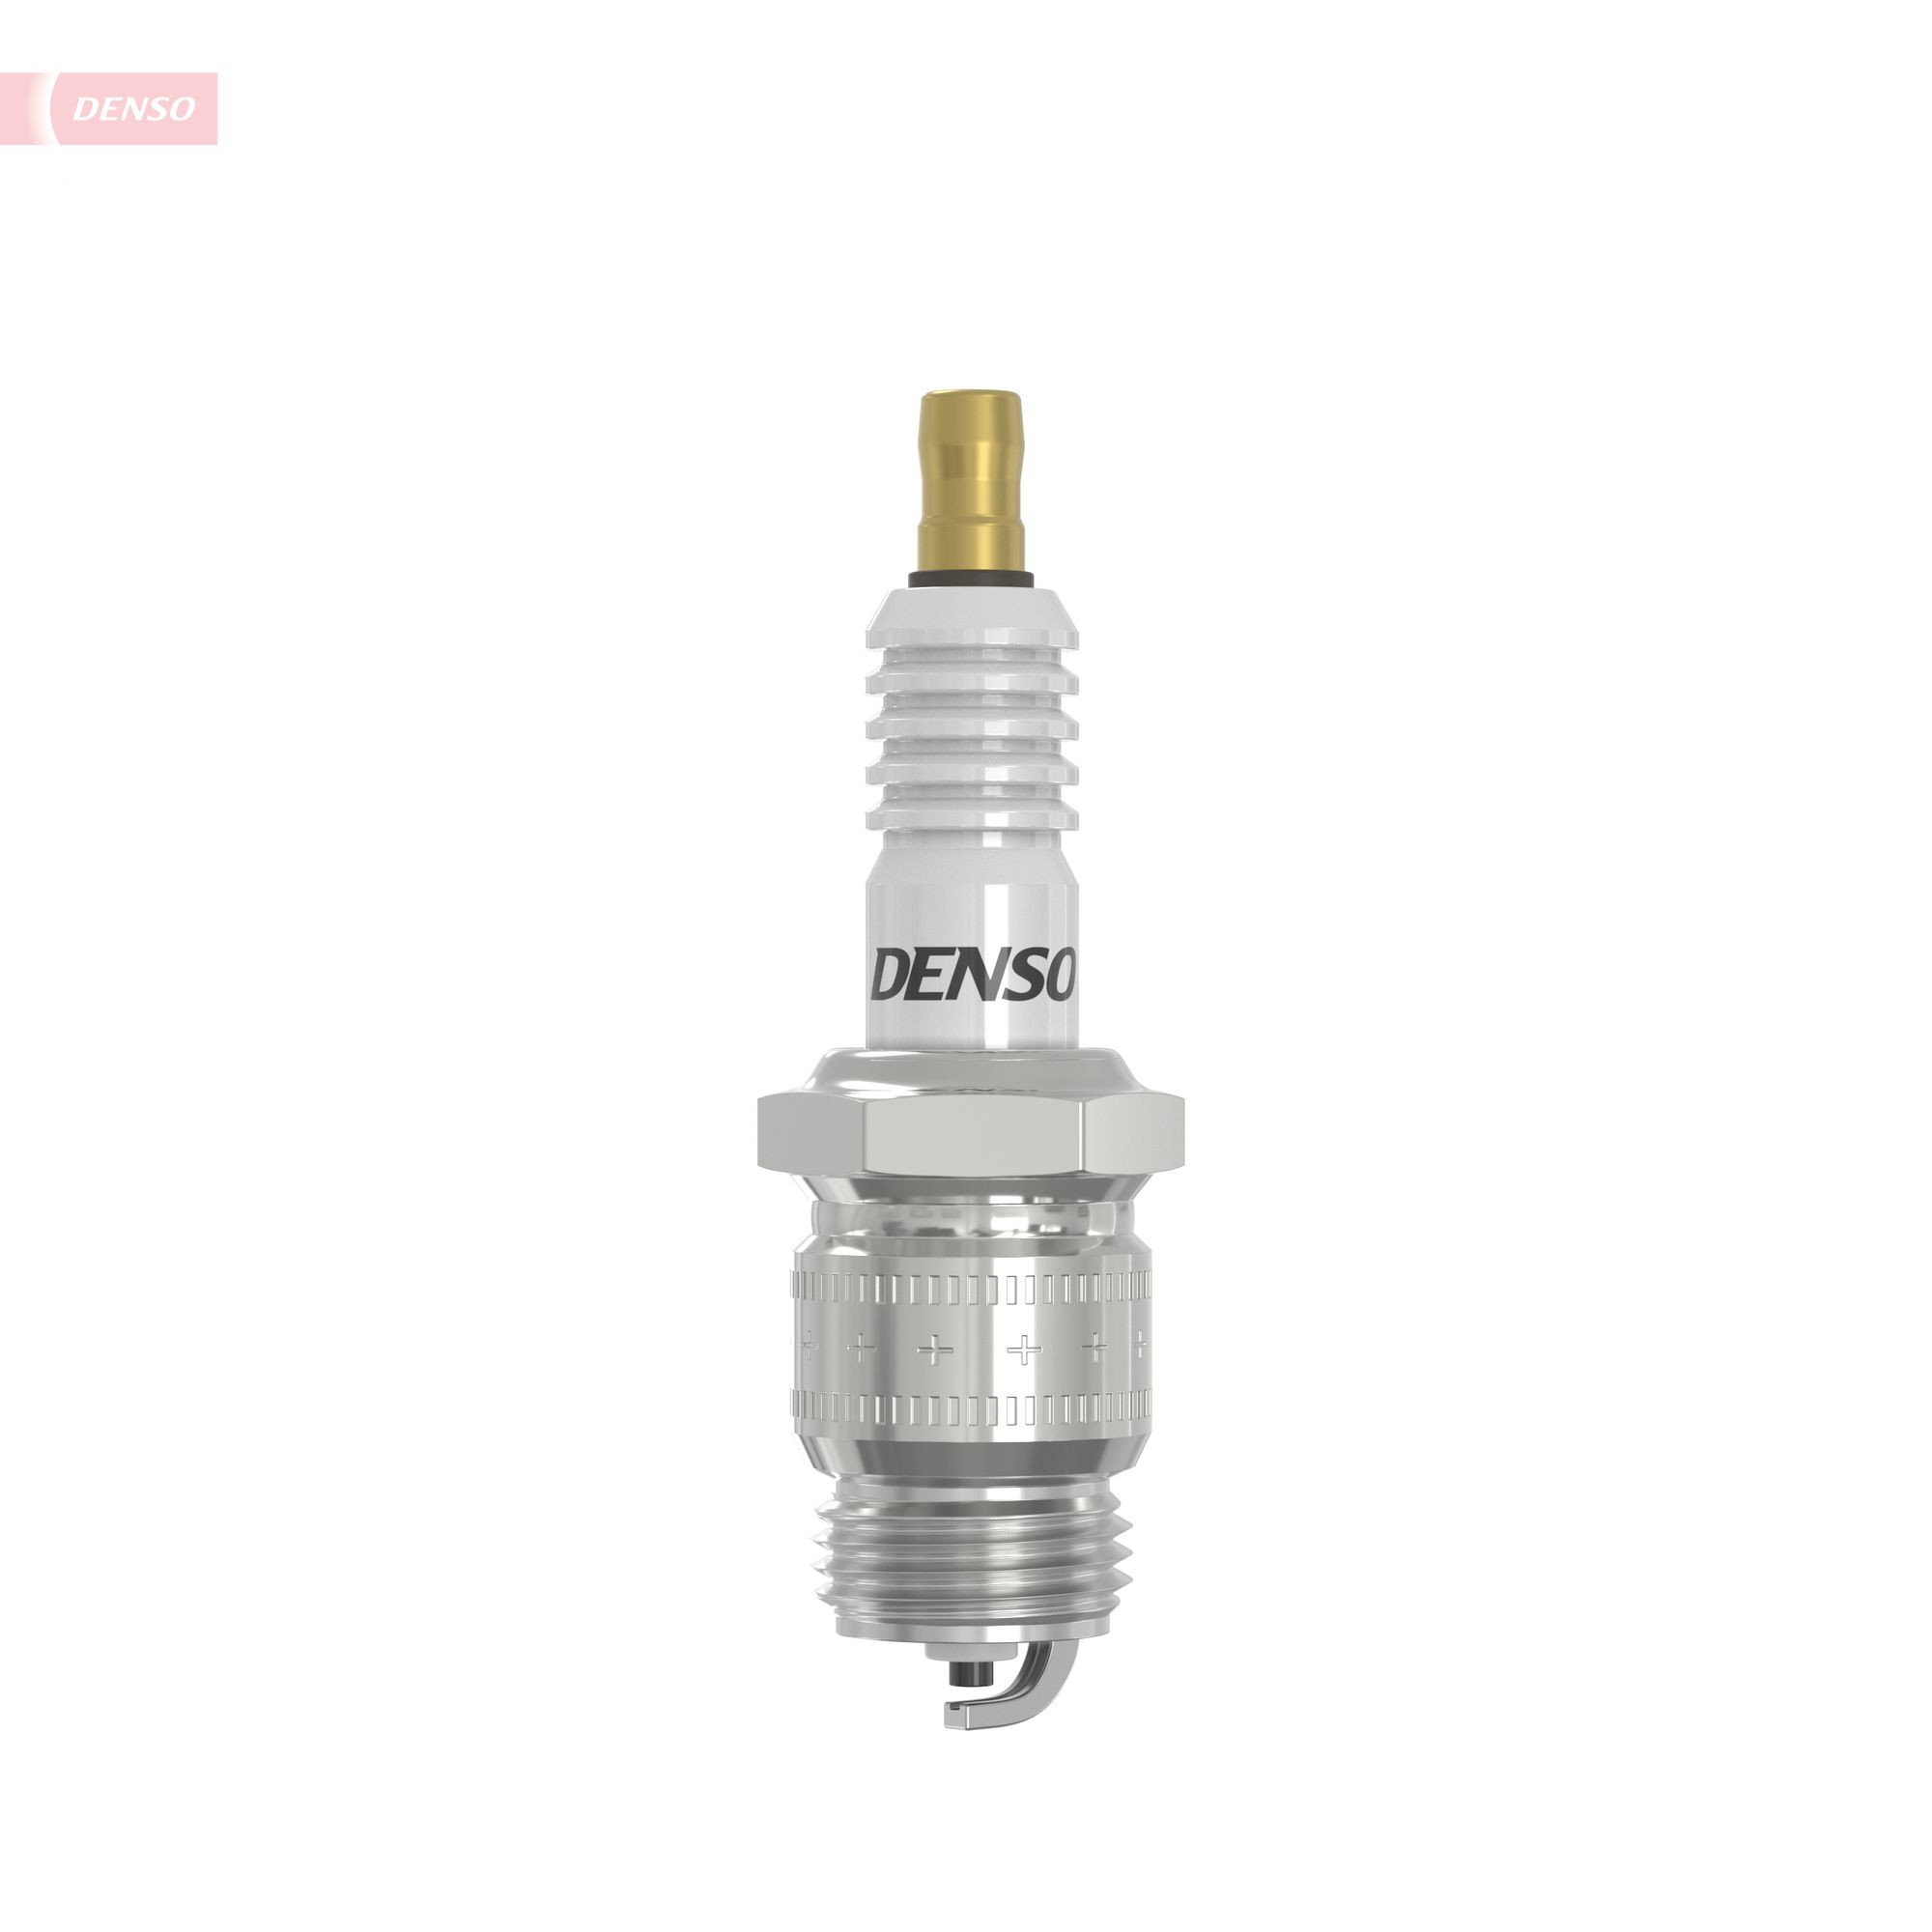 DENSO Nickel MA9P-U Spark plug Spanner Size: 20.6